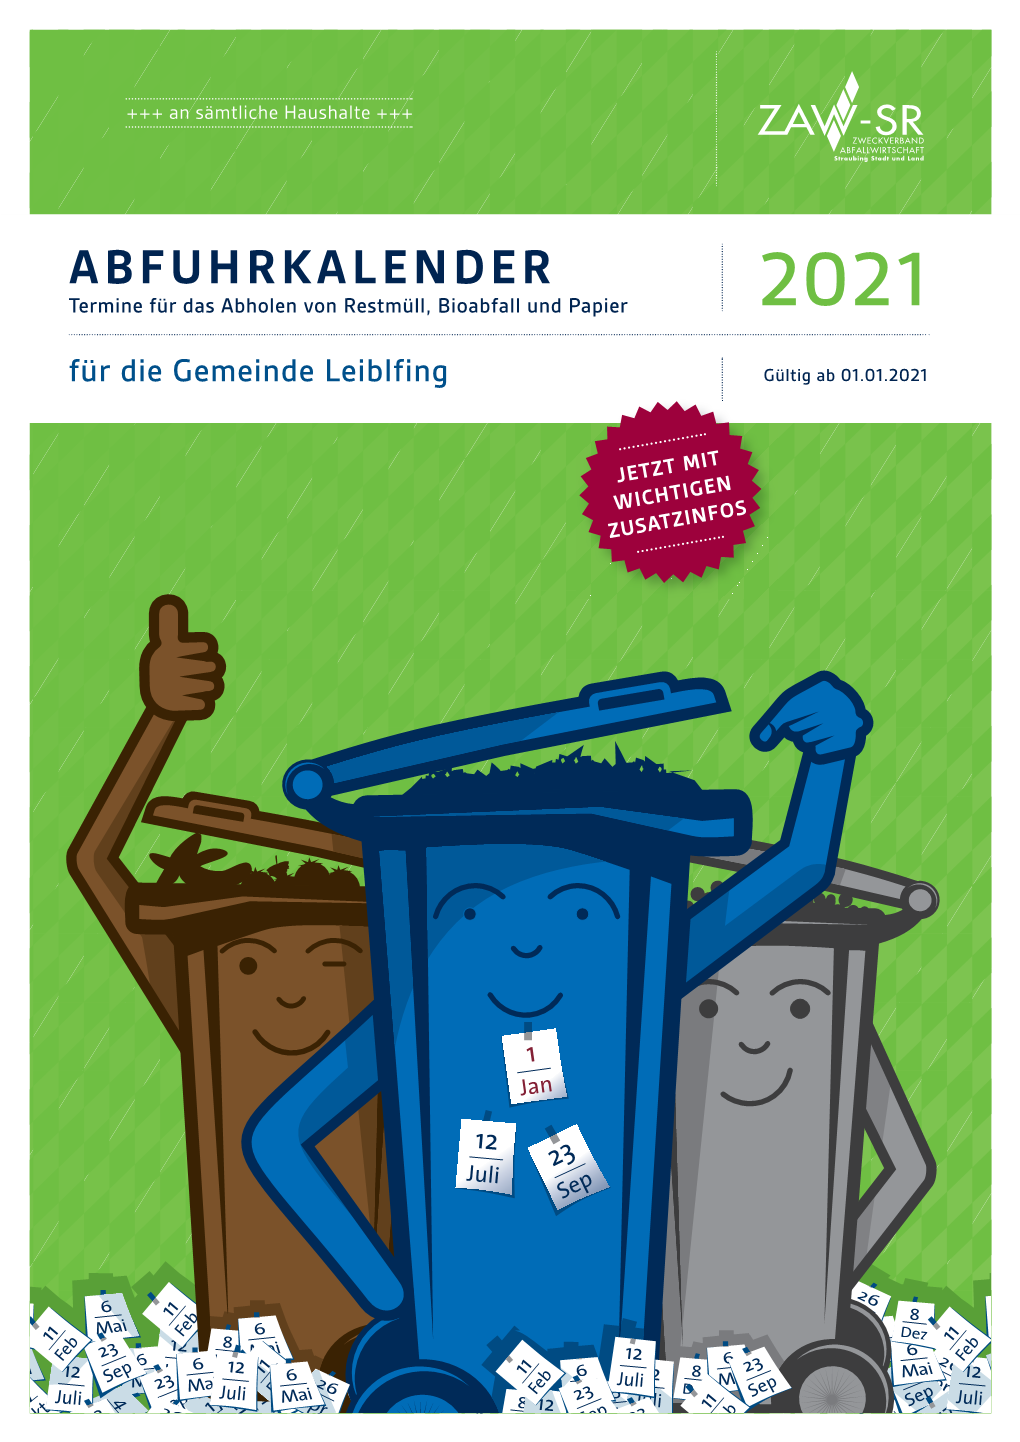 Abfuhrkalender 2021 Gemeinde Leiblfing